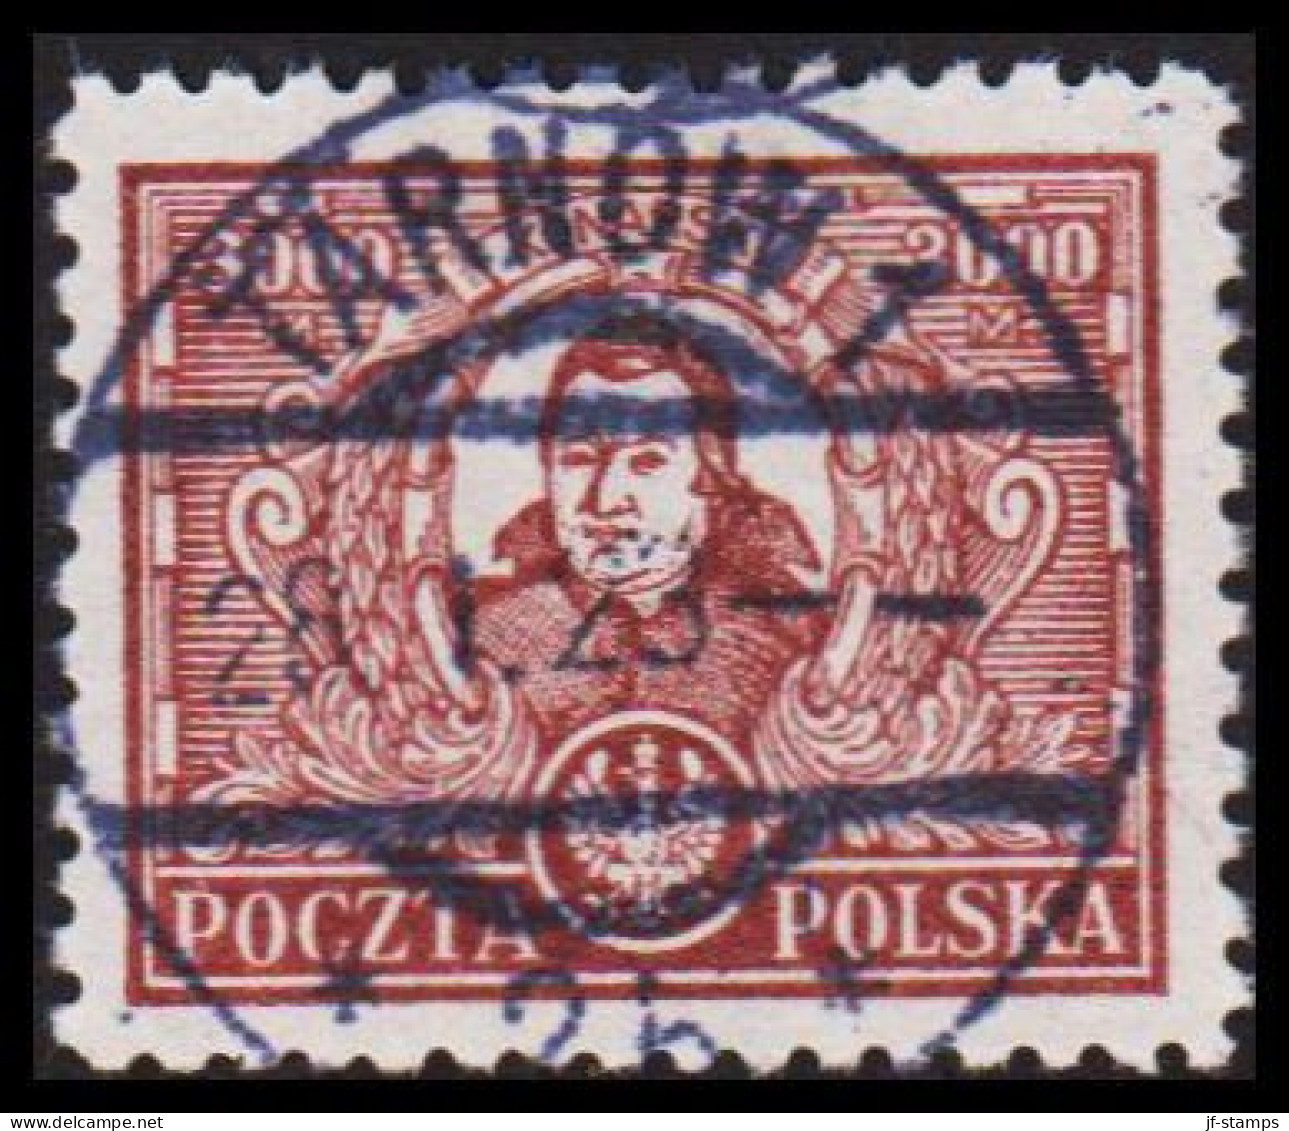 1923. POLSKA.  KONARSKI 3000 M. Luxus Cancel TARNOW 28 1 23.  (Michel 183) - JF545900 - Usati